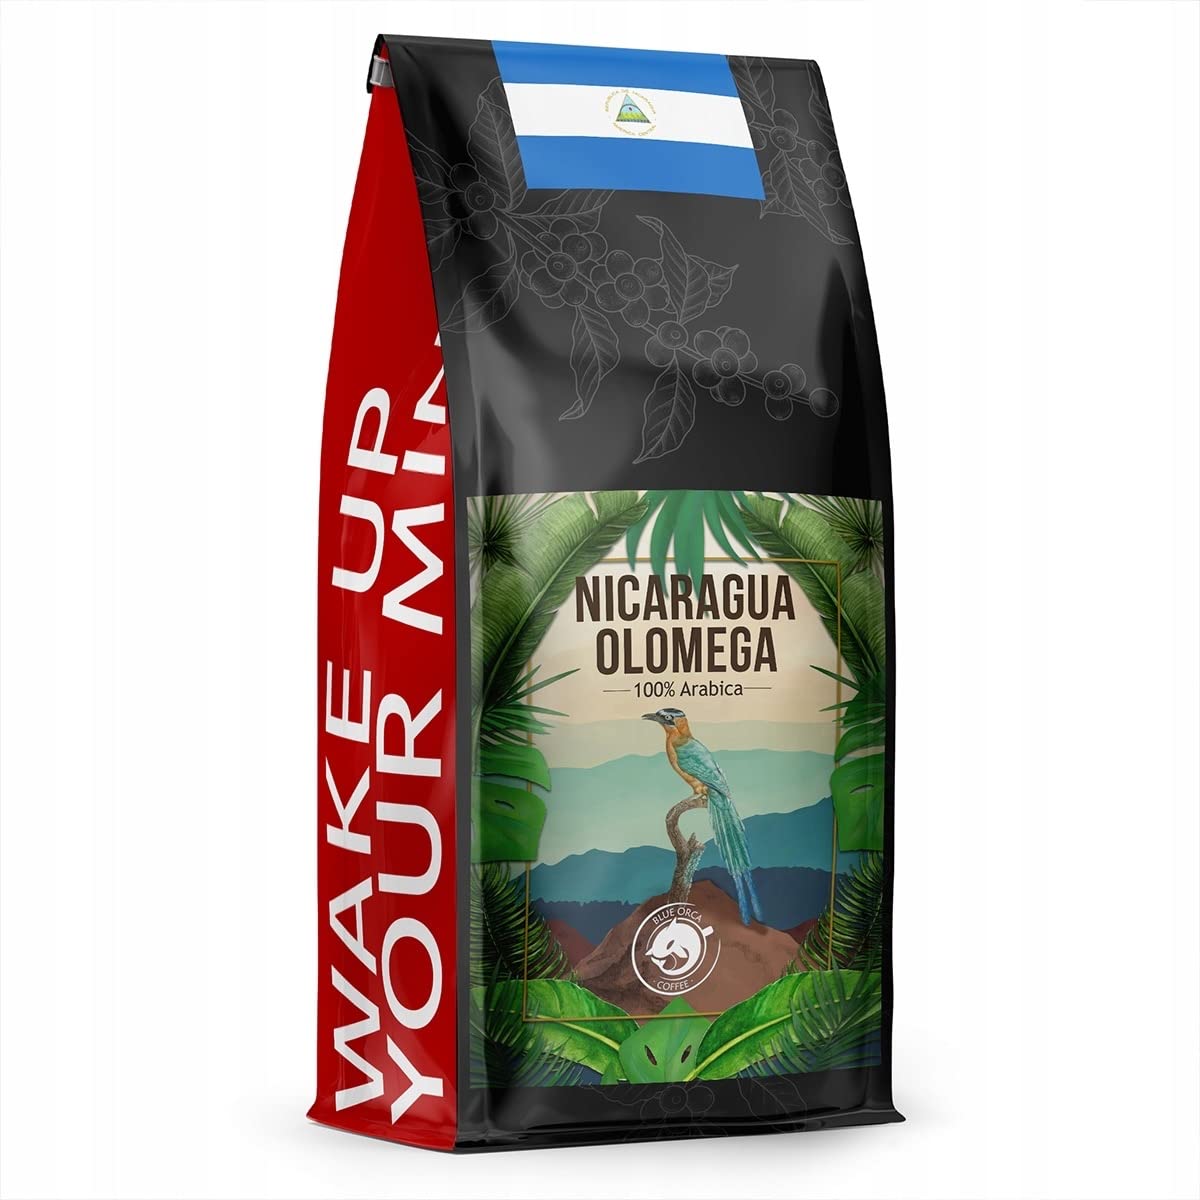 Blue Orca Coffee - NICARAGUA OLOMEGA - Specialty Kaffeebohnen aus Nicaragua Olomega - Frisch geröstet - Single Origin - SCA 82.5 Punkte, 1 kg
